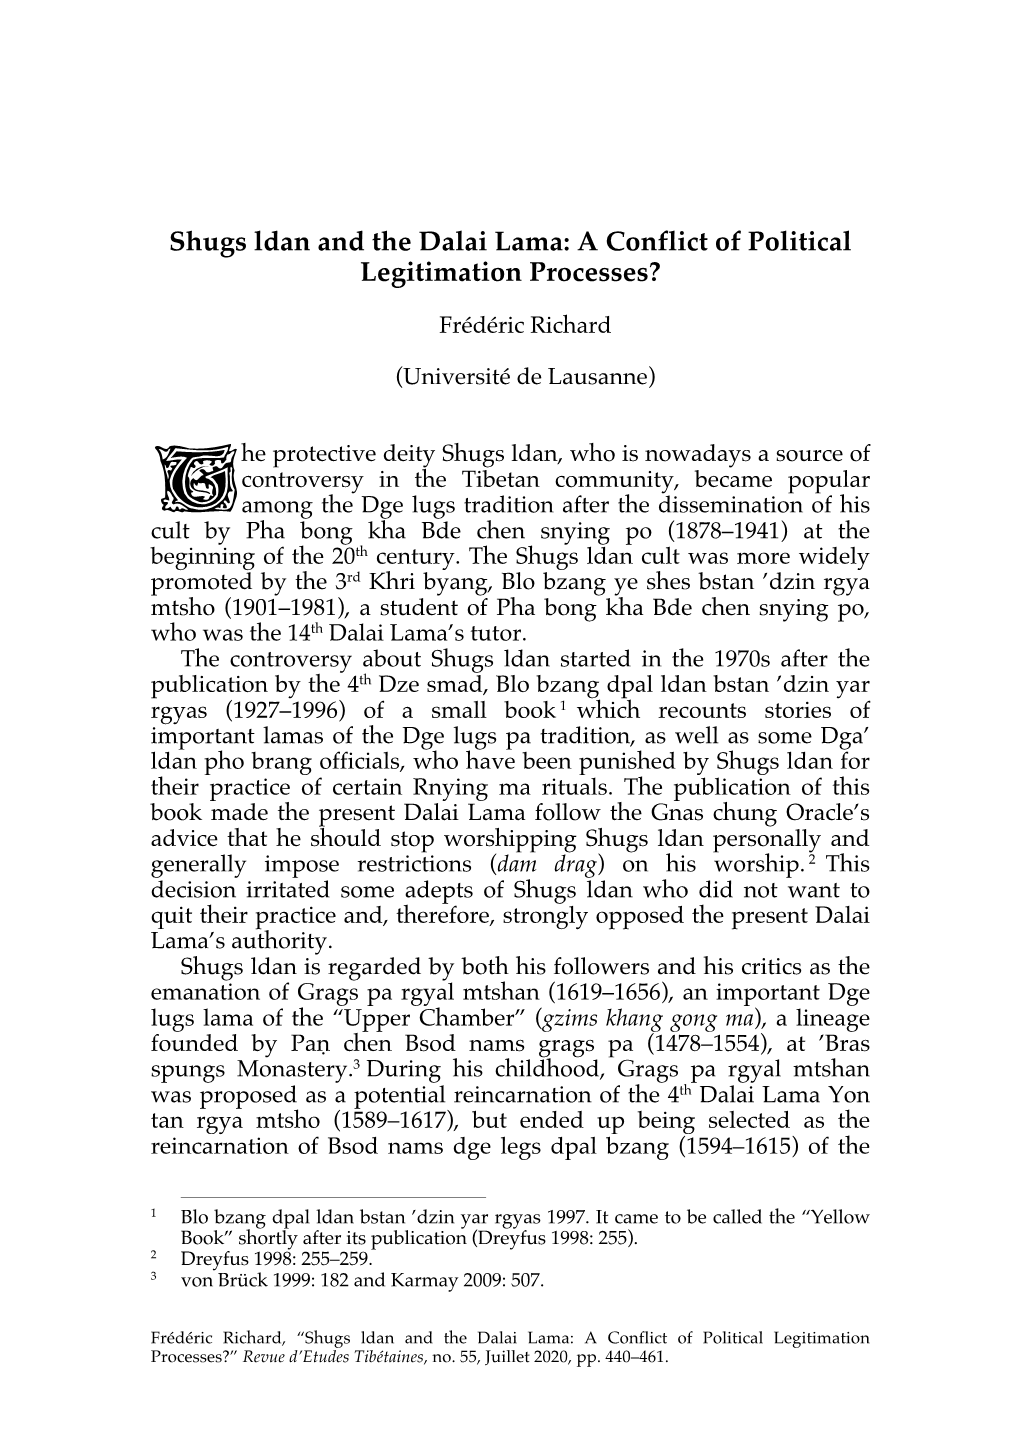 Shugs Ldan and the Dalai Lama: a Conflict of Political Legitimation Processes?